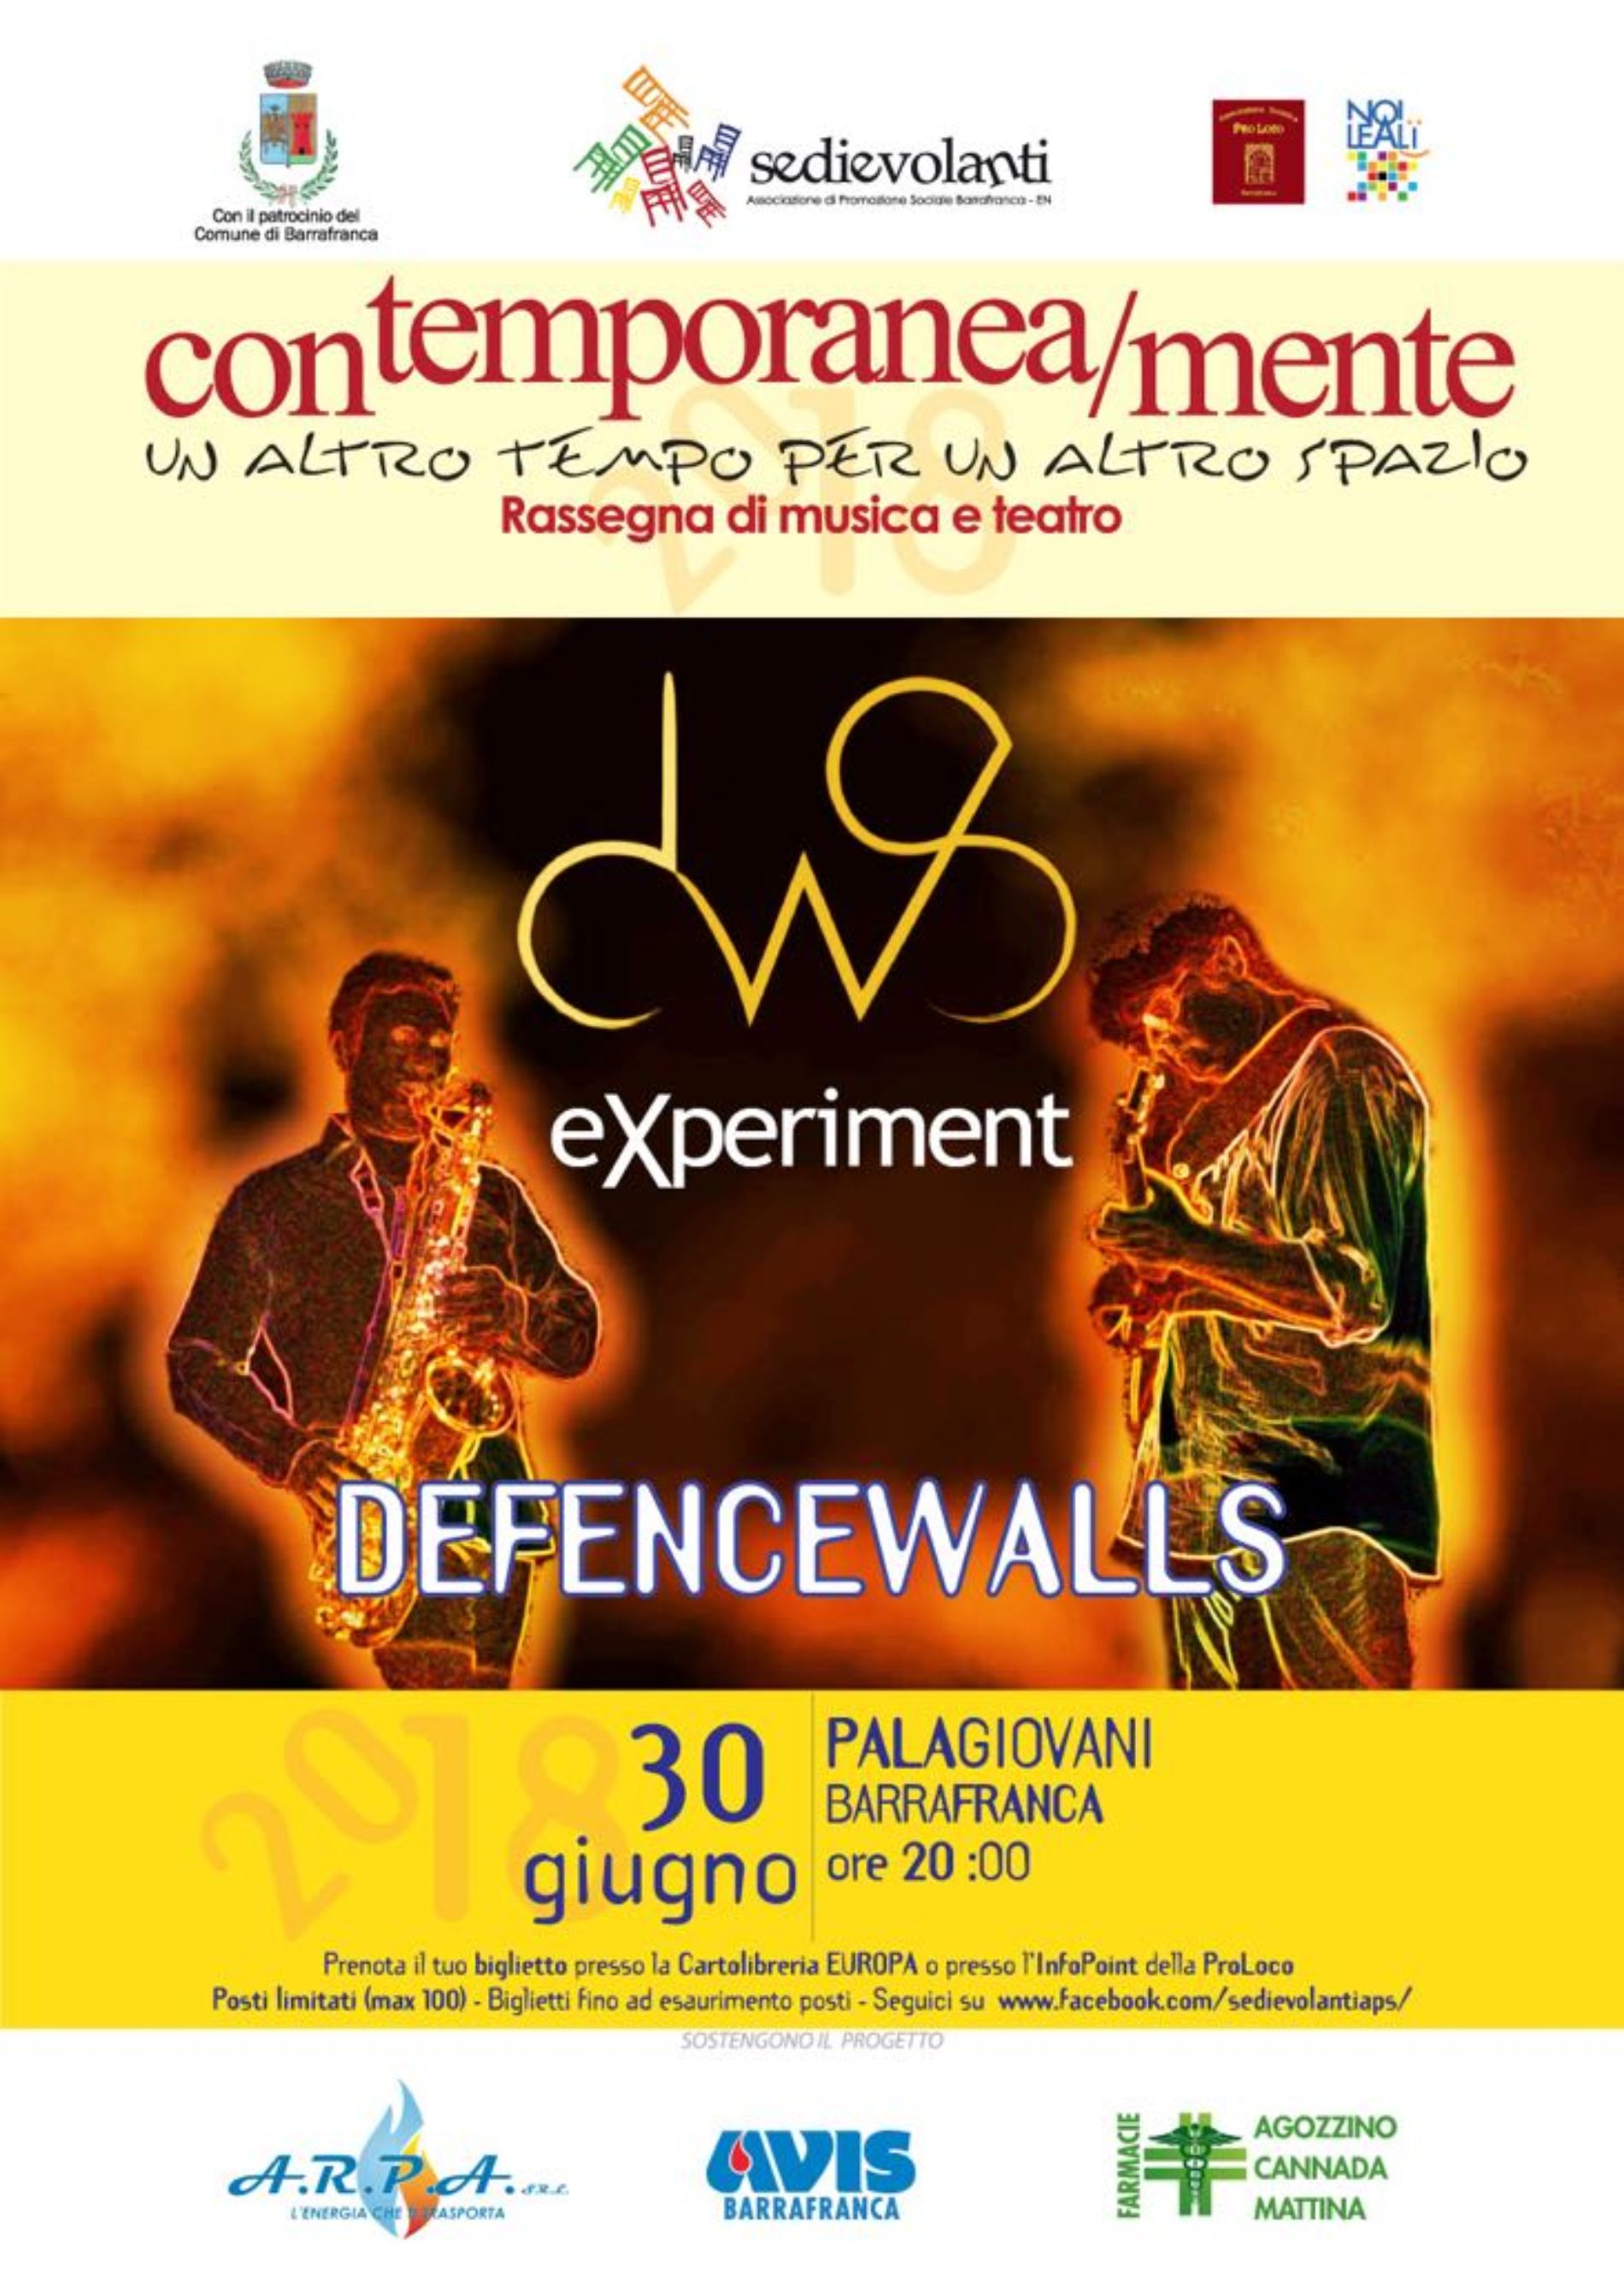 Sabato 30 giugno al Palagiovani di Barrafranca i Defencewalls in “Experiment”